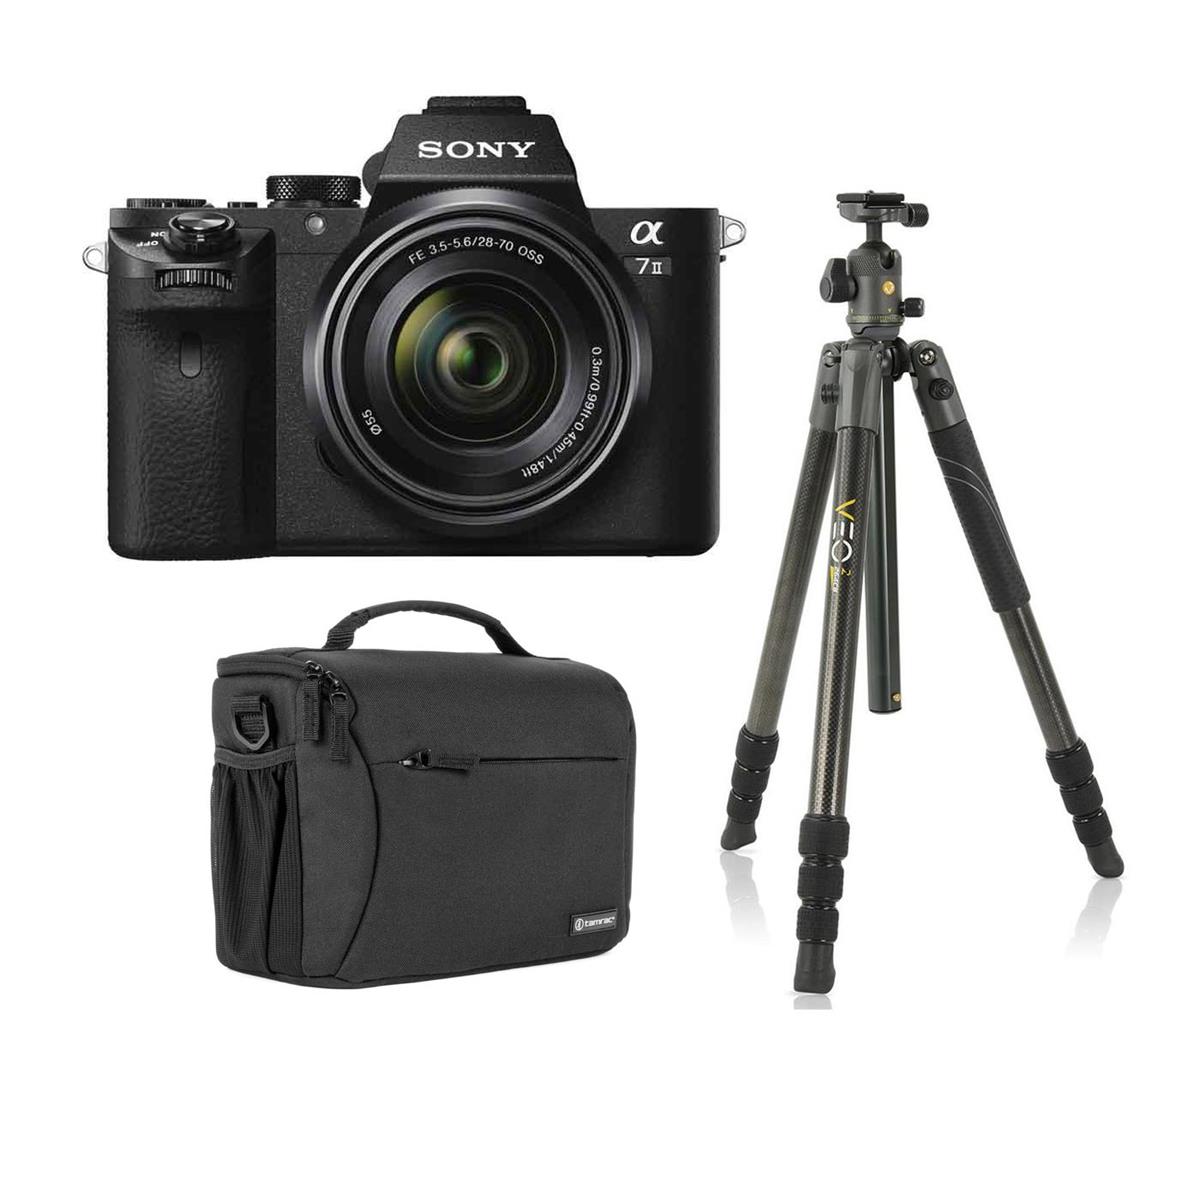 Sony Alpha a7II Camera w/FE 28-70mm f/3.5-5.6 OSS Lens, Bundle w/VEO 2 Al Tripod